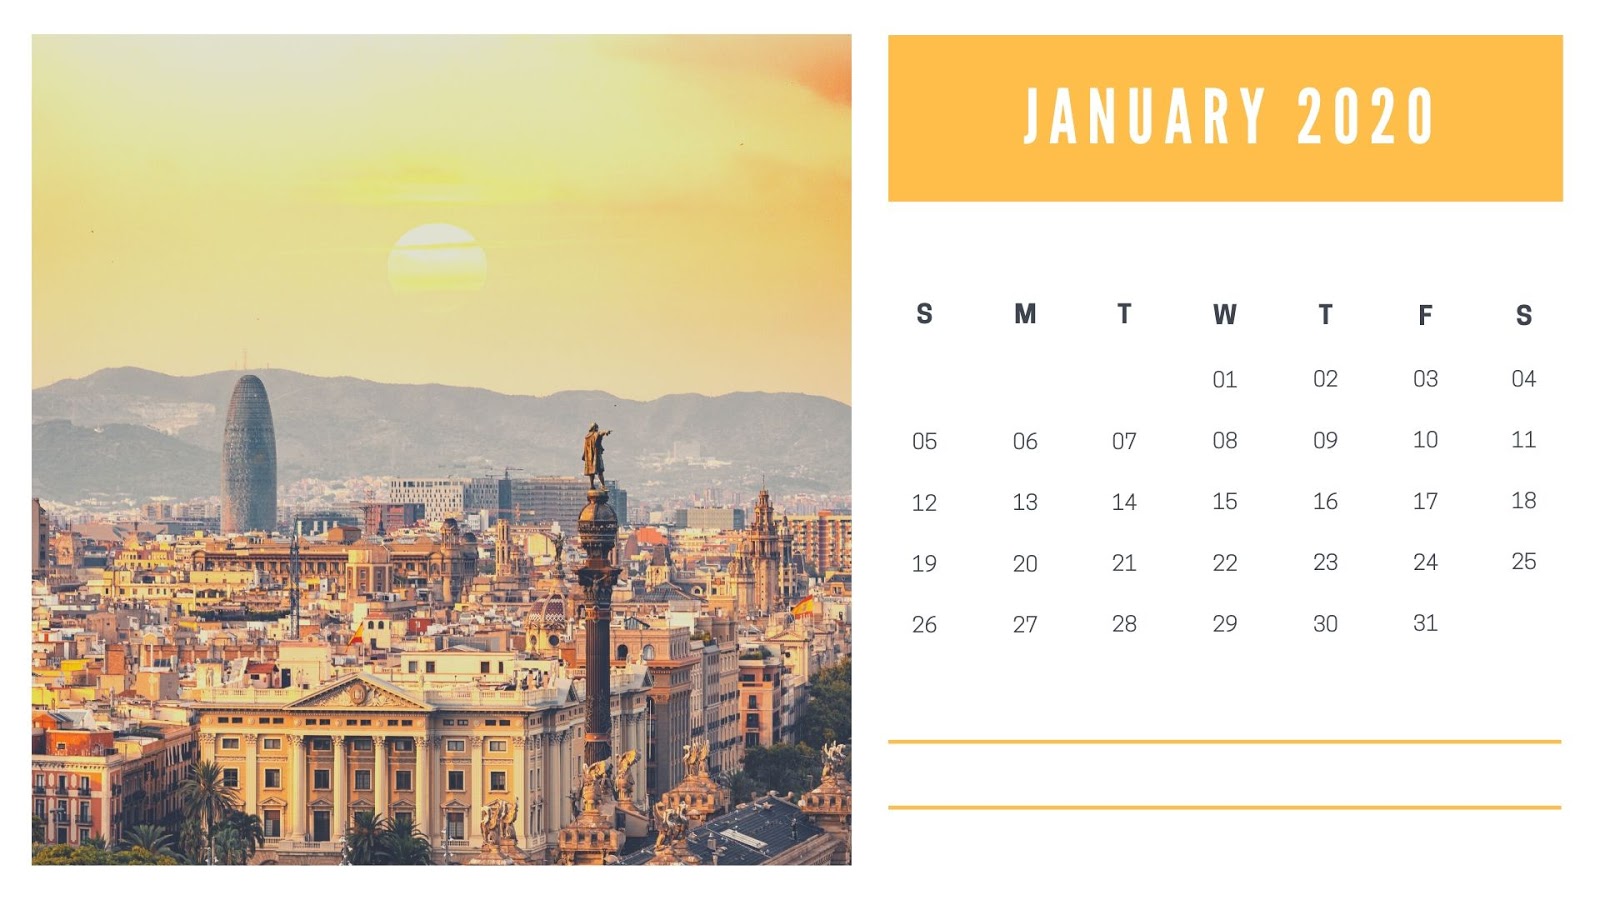 January 2020 Calendar images HD Wallpaper